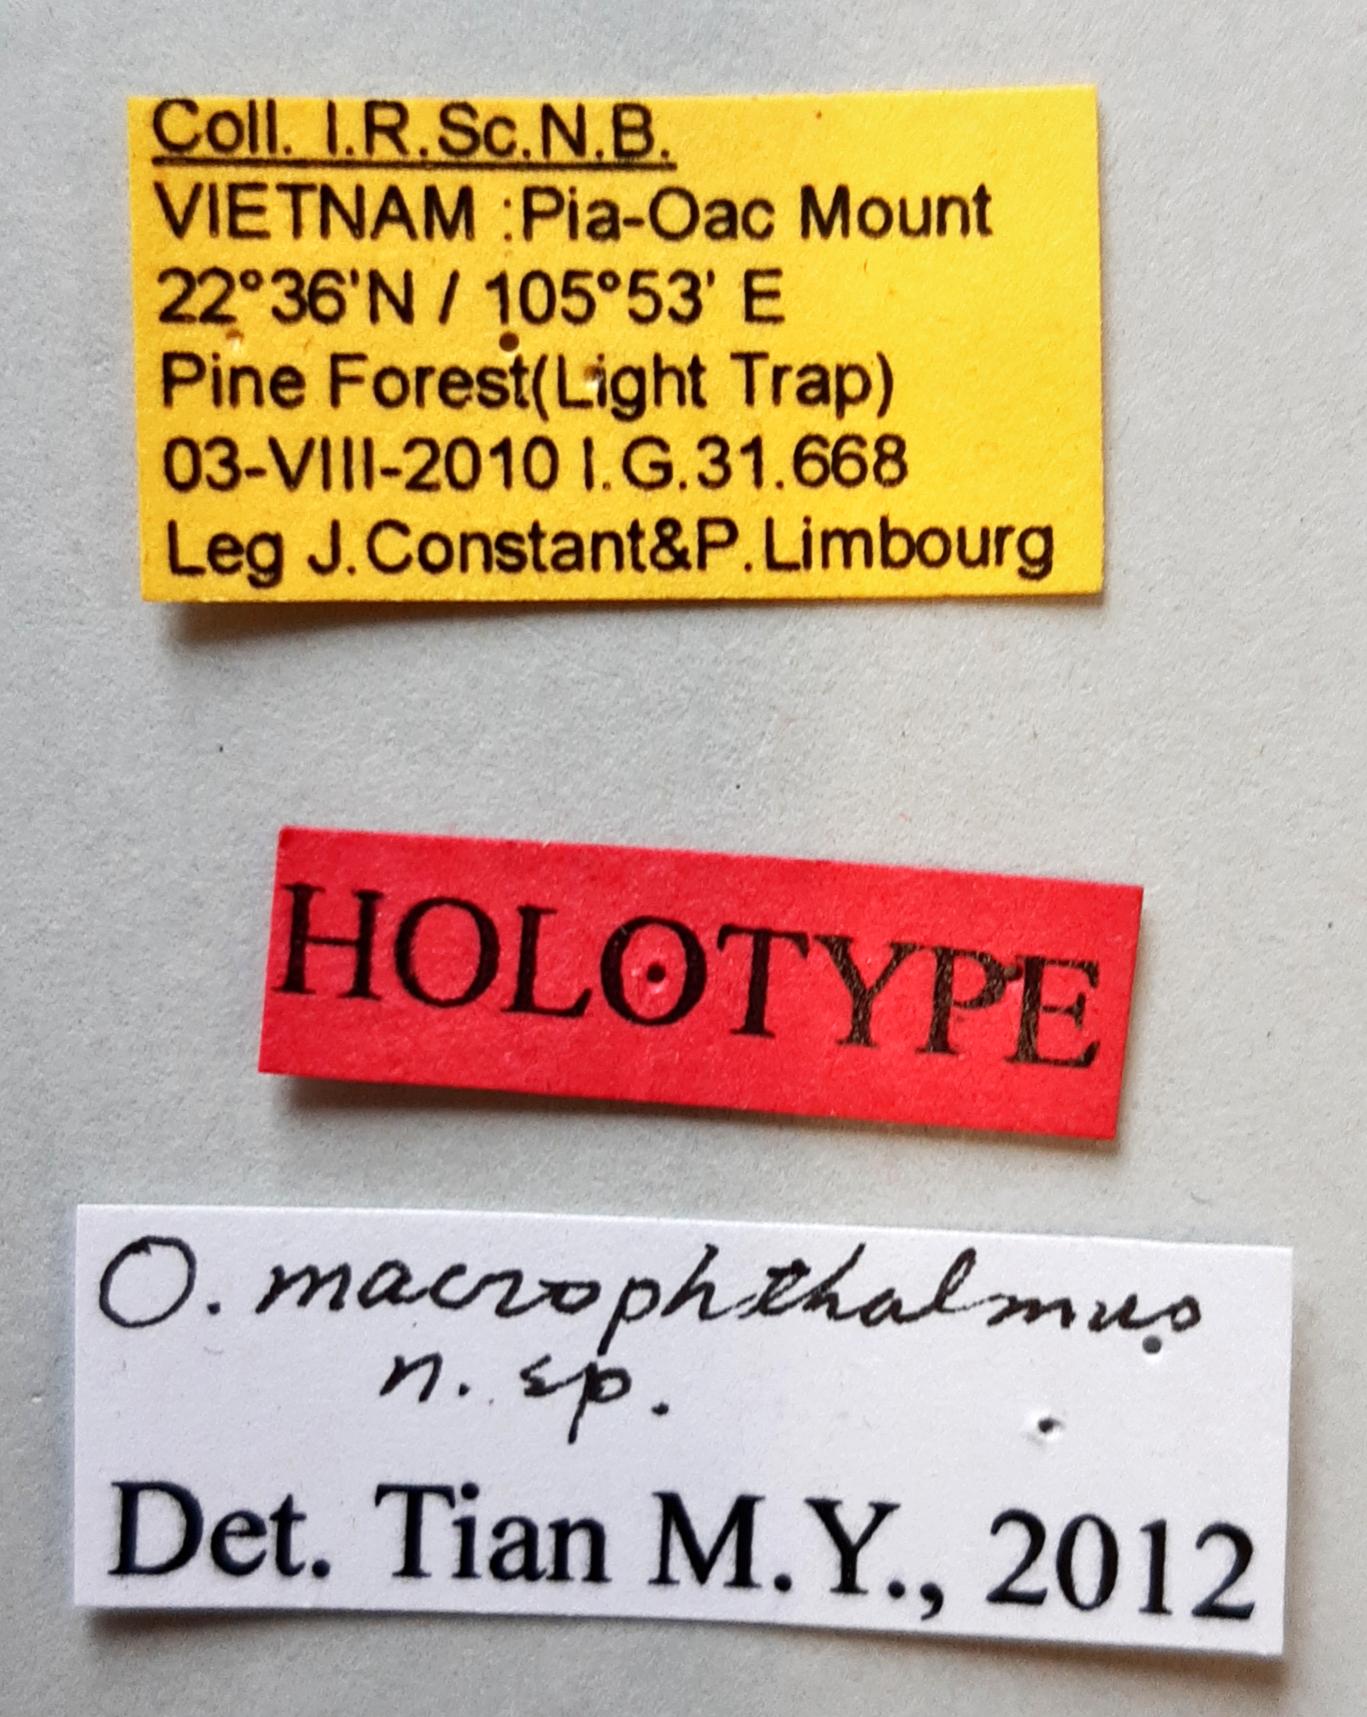 Orthogonius macrophtalmus Ht labels